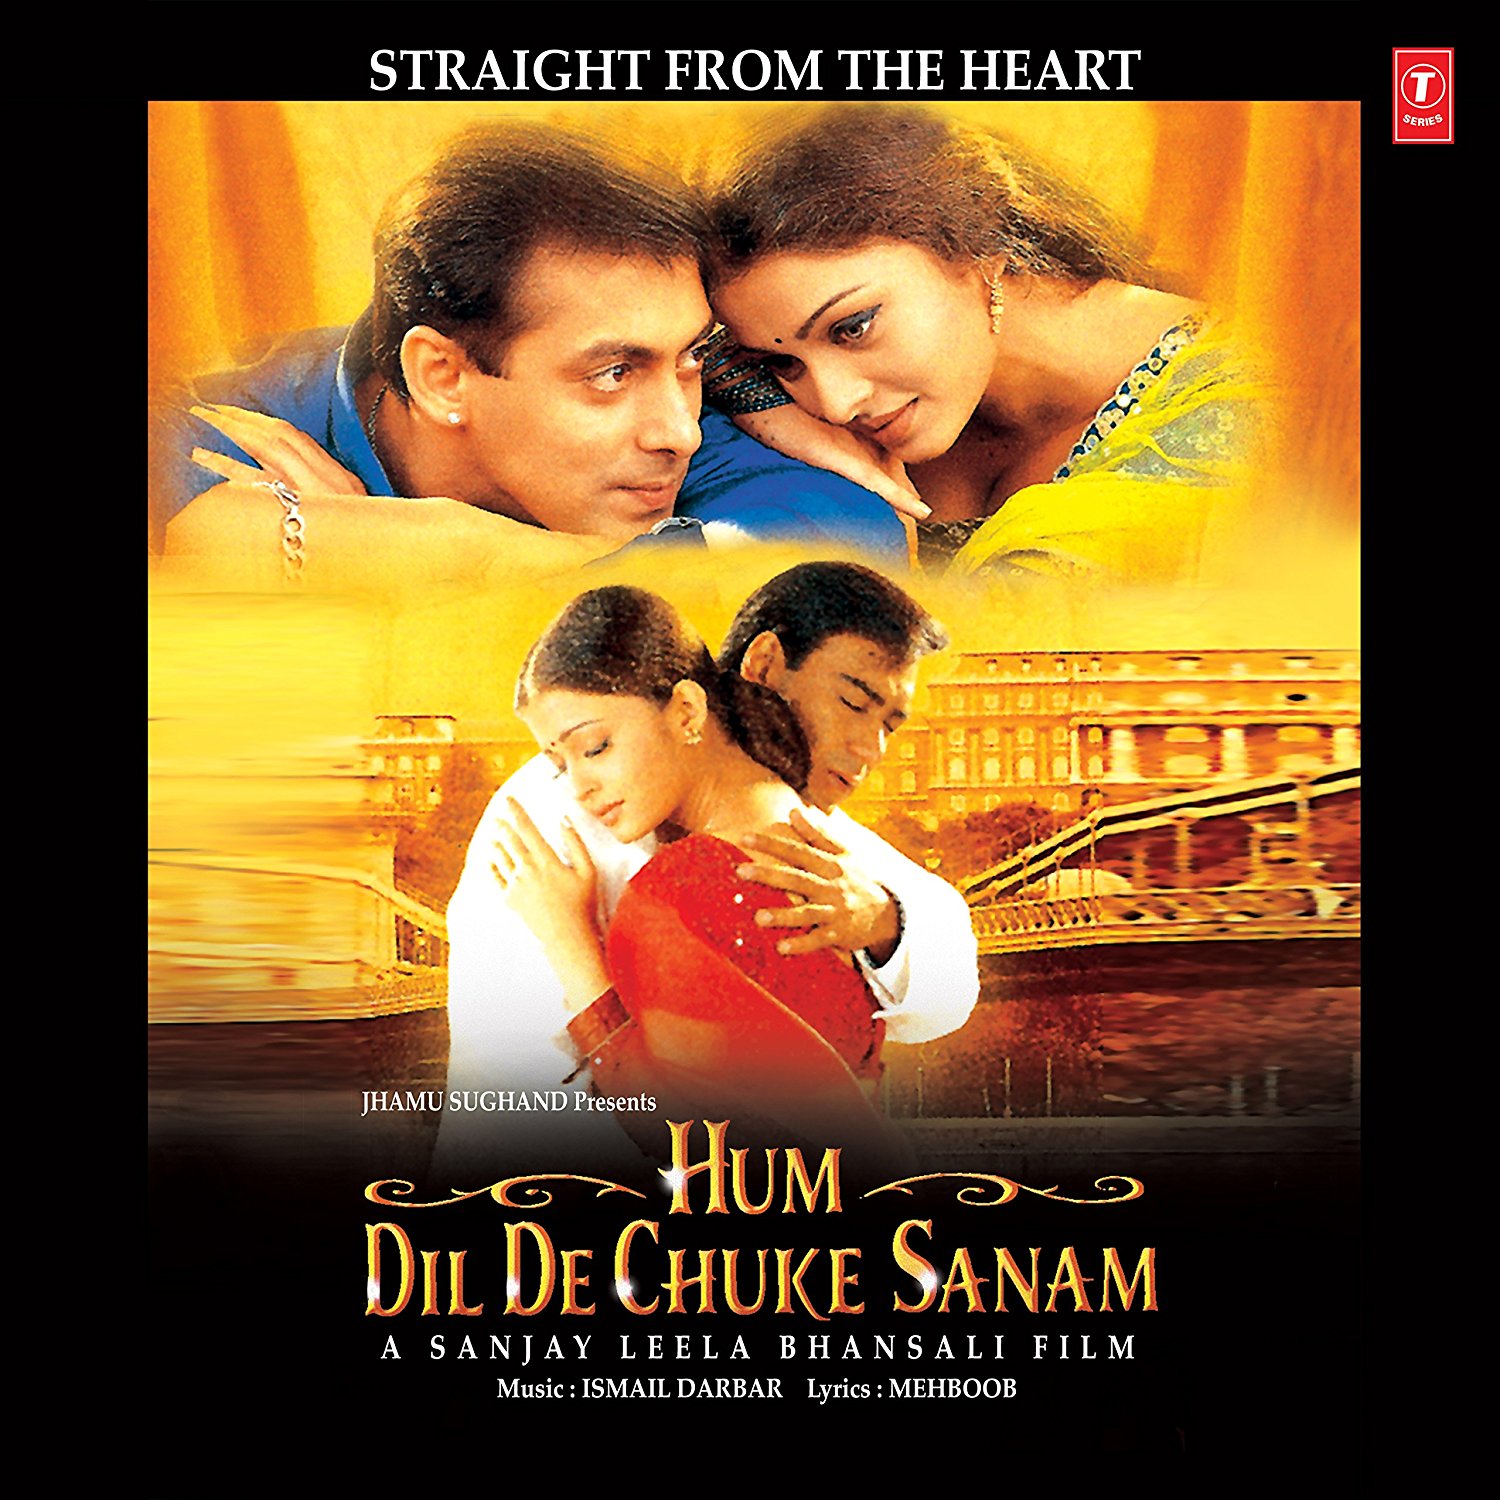 Watch Salman Khan's GREATEST Movies During LOCKDOWN! 3